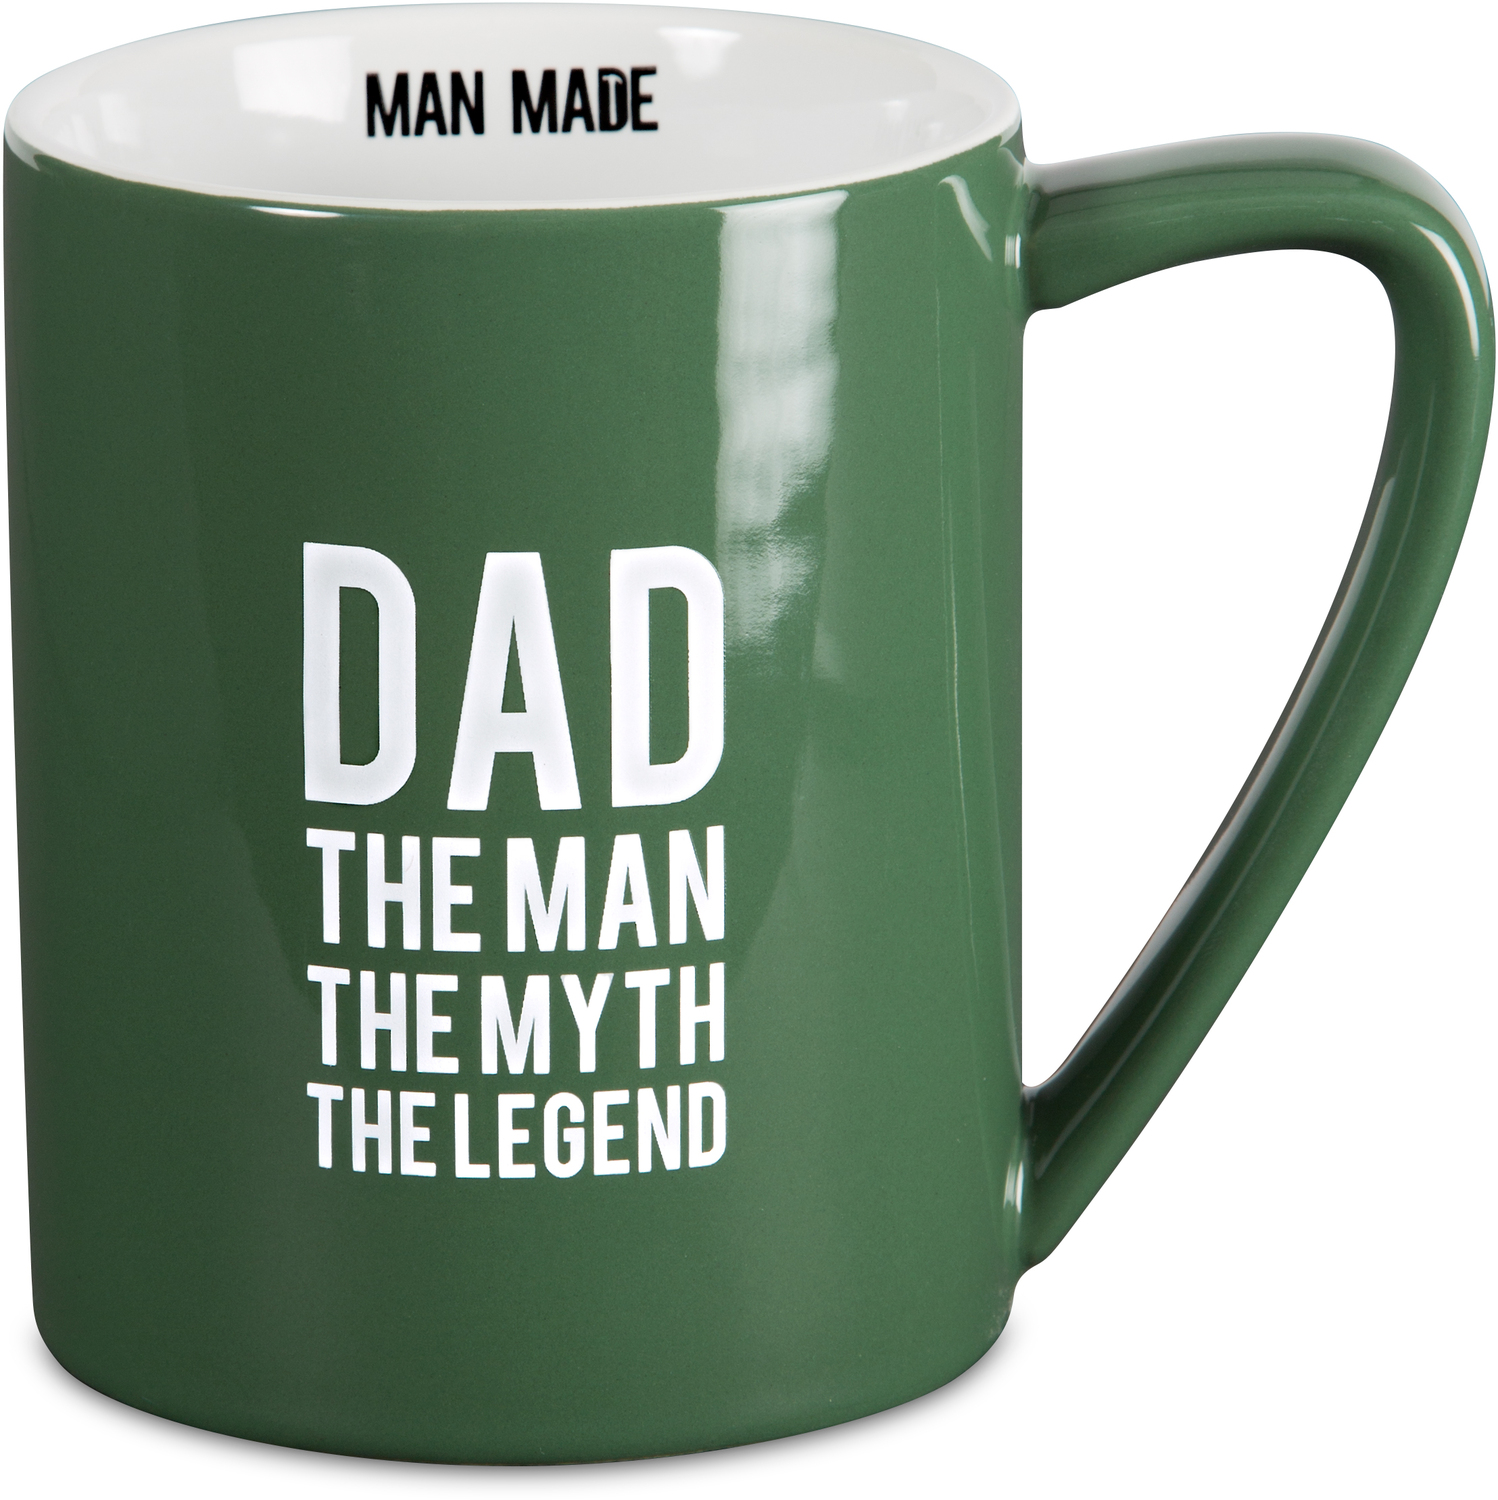 Dad the Legend by Man Made - Dad the Legend - 18 oz. Mug